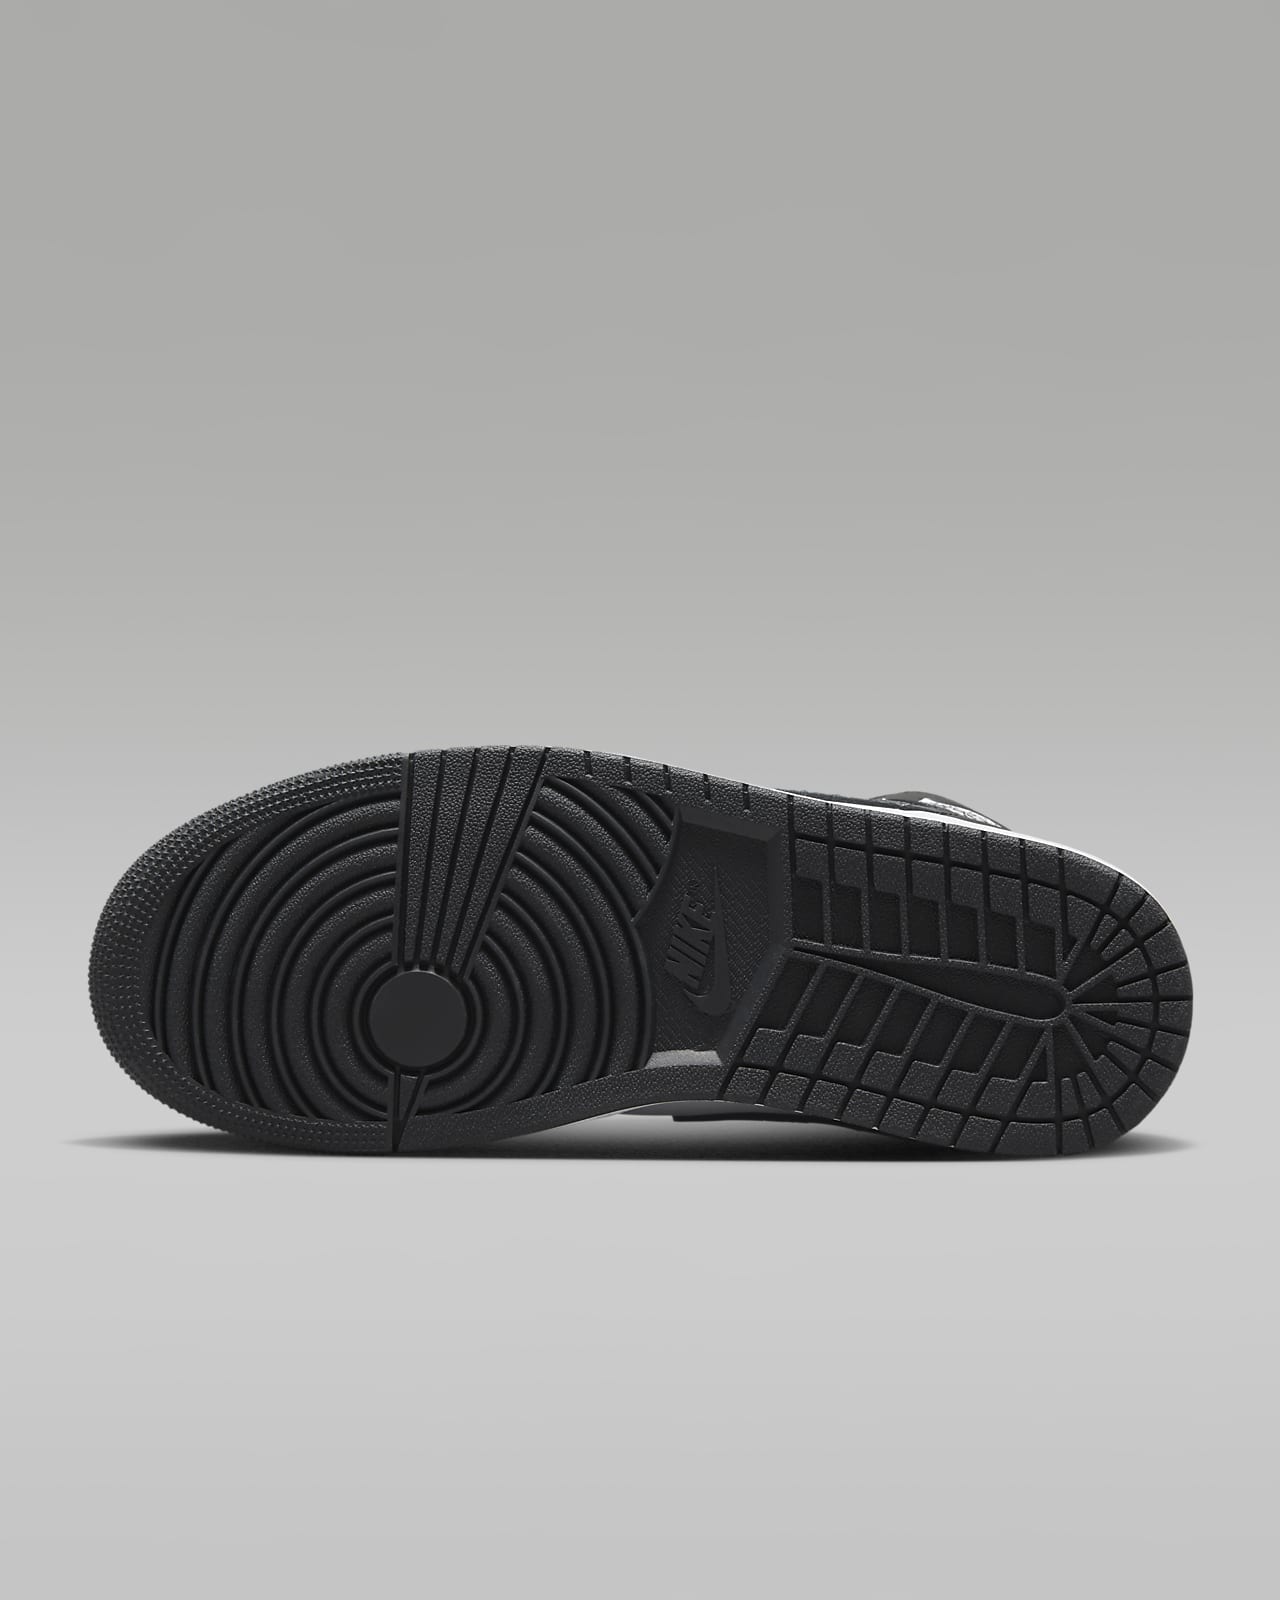 Air Jordan 1 Mid SE Men's Shoes, by Nike Size 10.5 (Black)